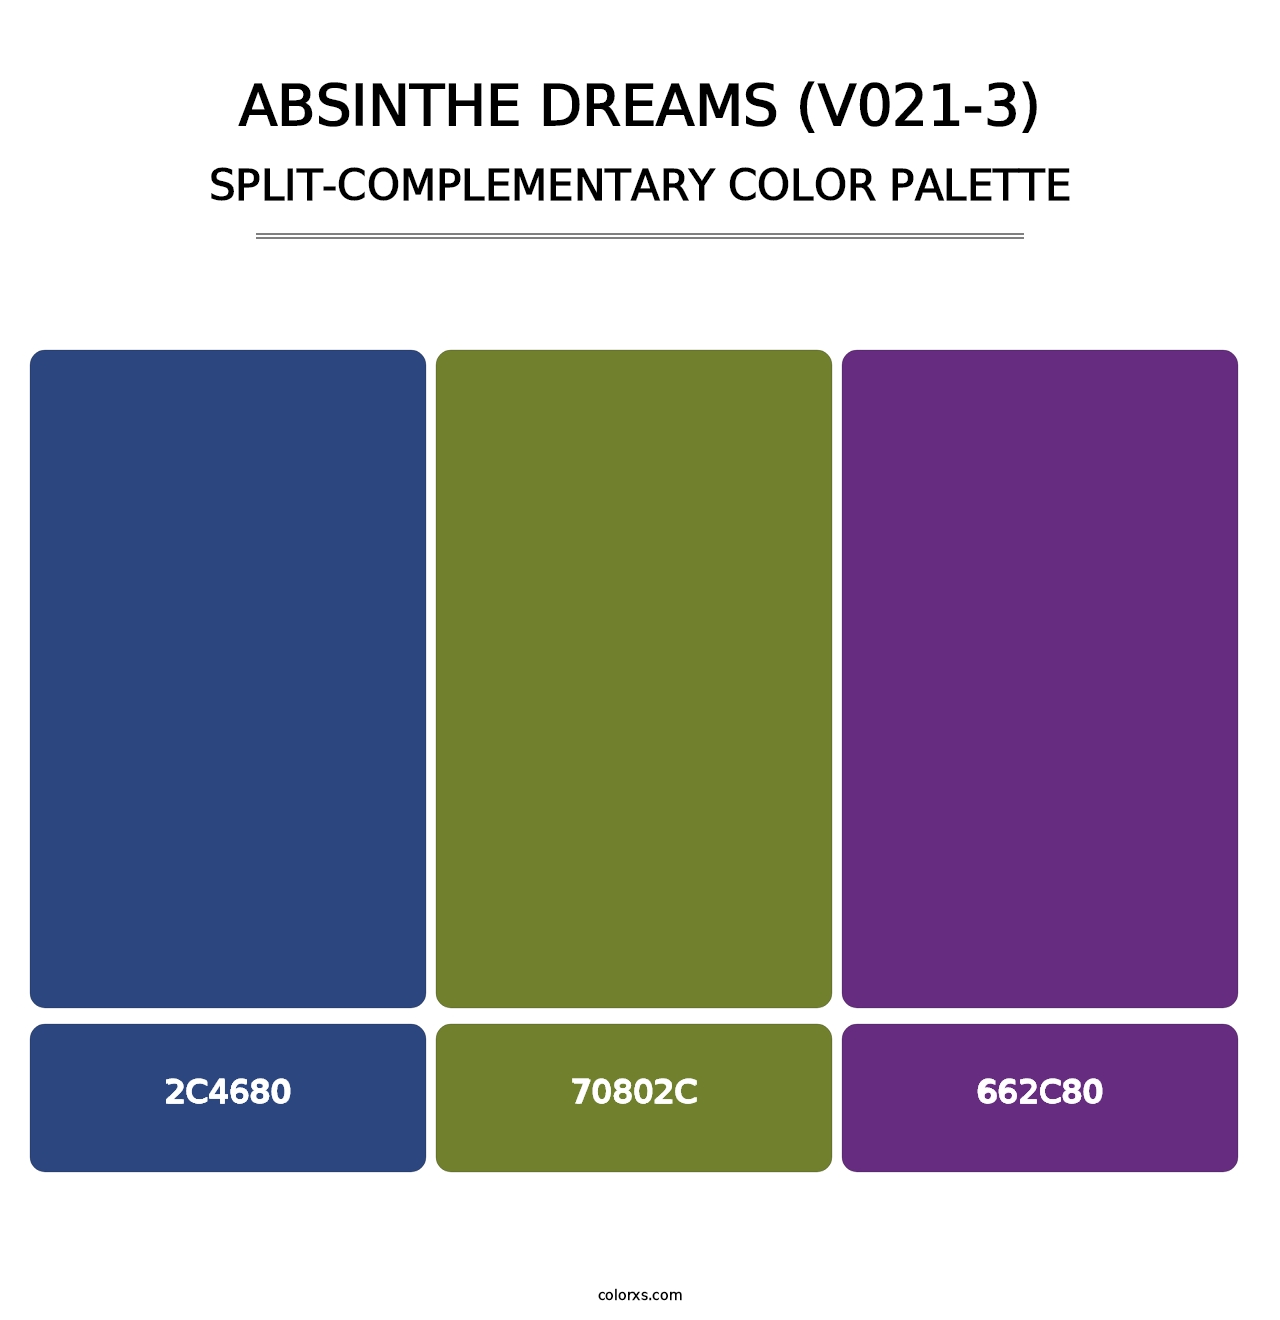 Absinthe Dreams (V021-3) - Split-Complementary Color Palette